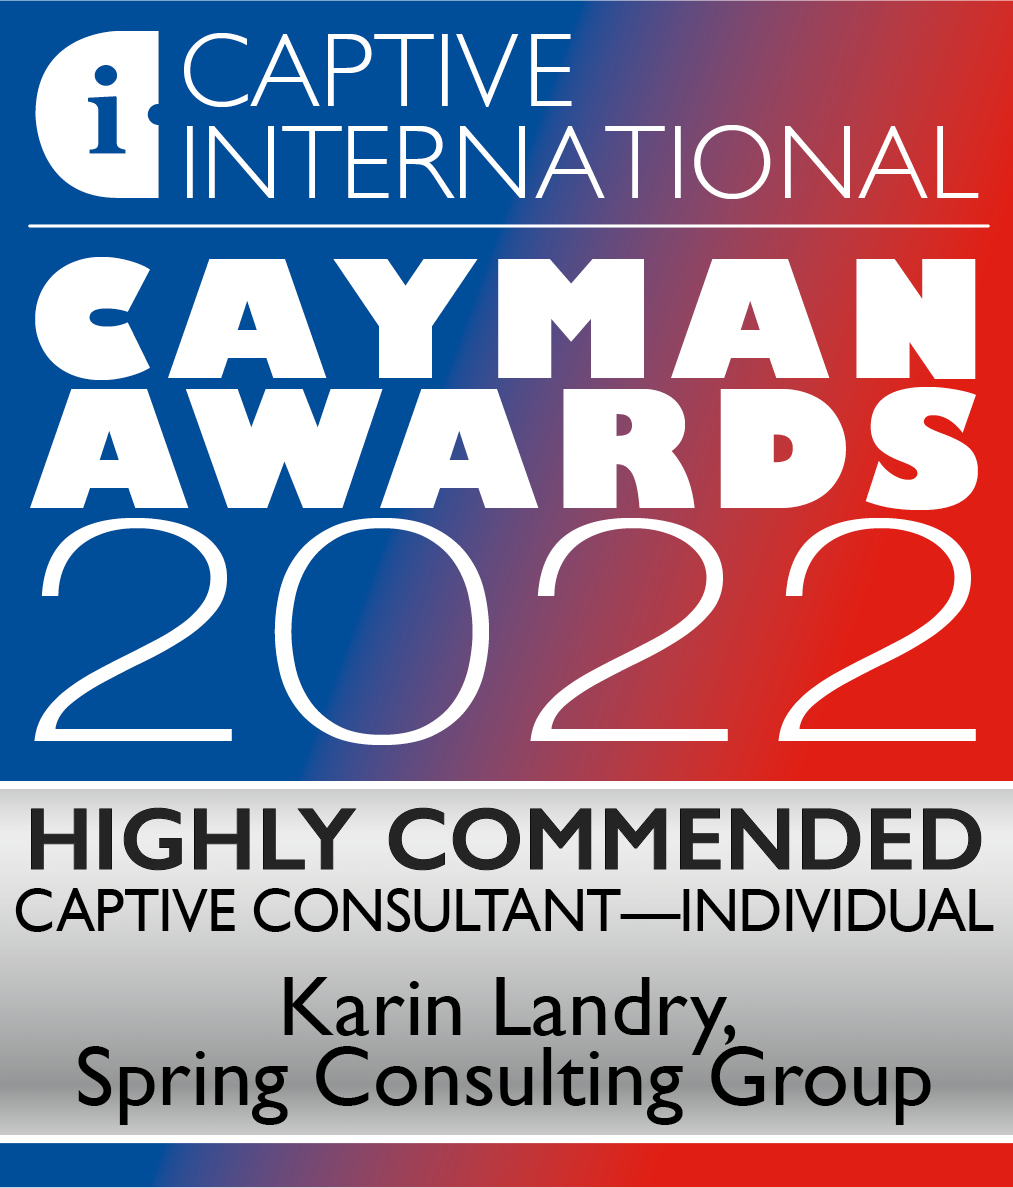 Captive International Cayman Awards 2022 Spring Consulting Group